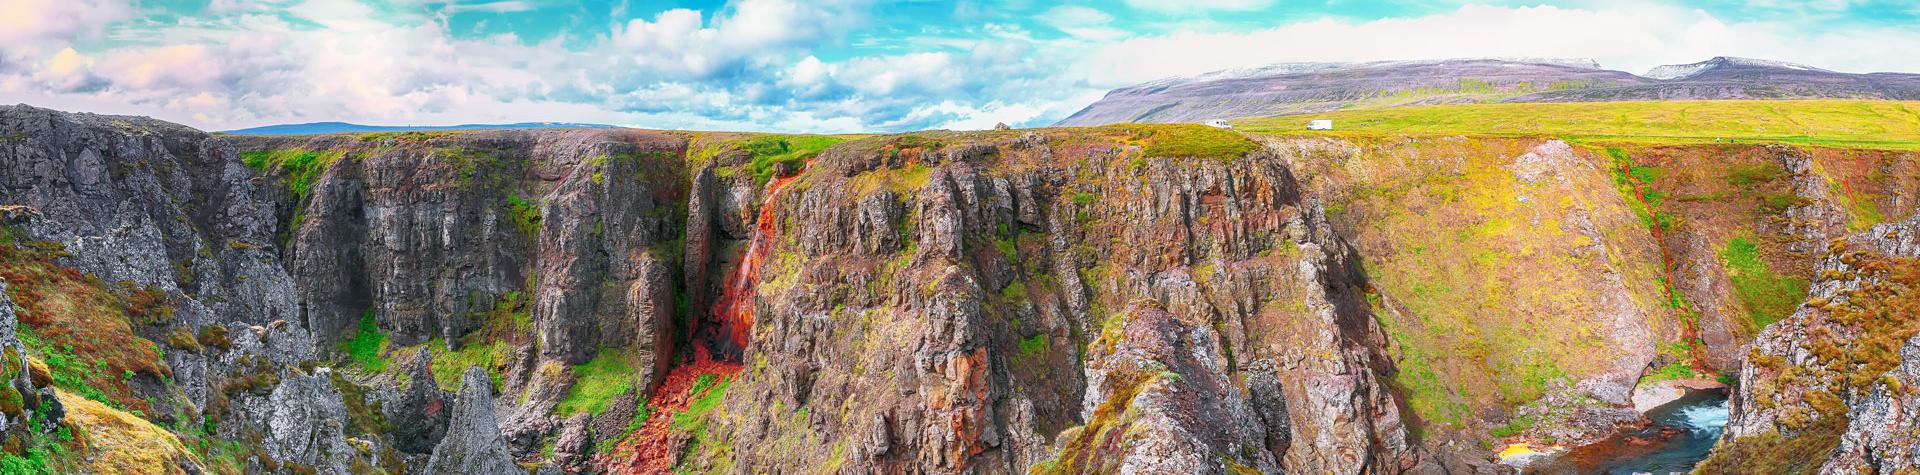 Kolugljufur canyon, Iceland.